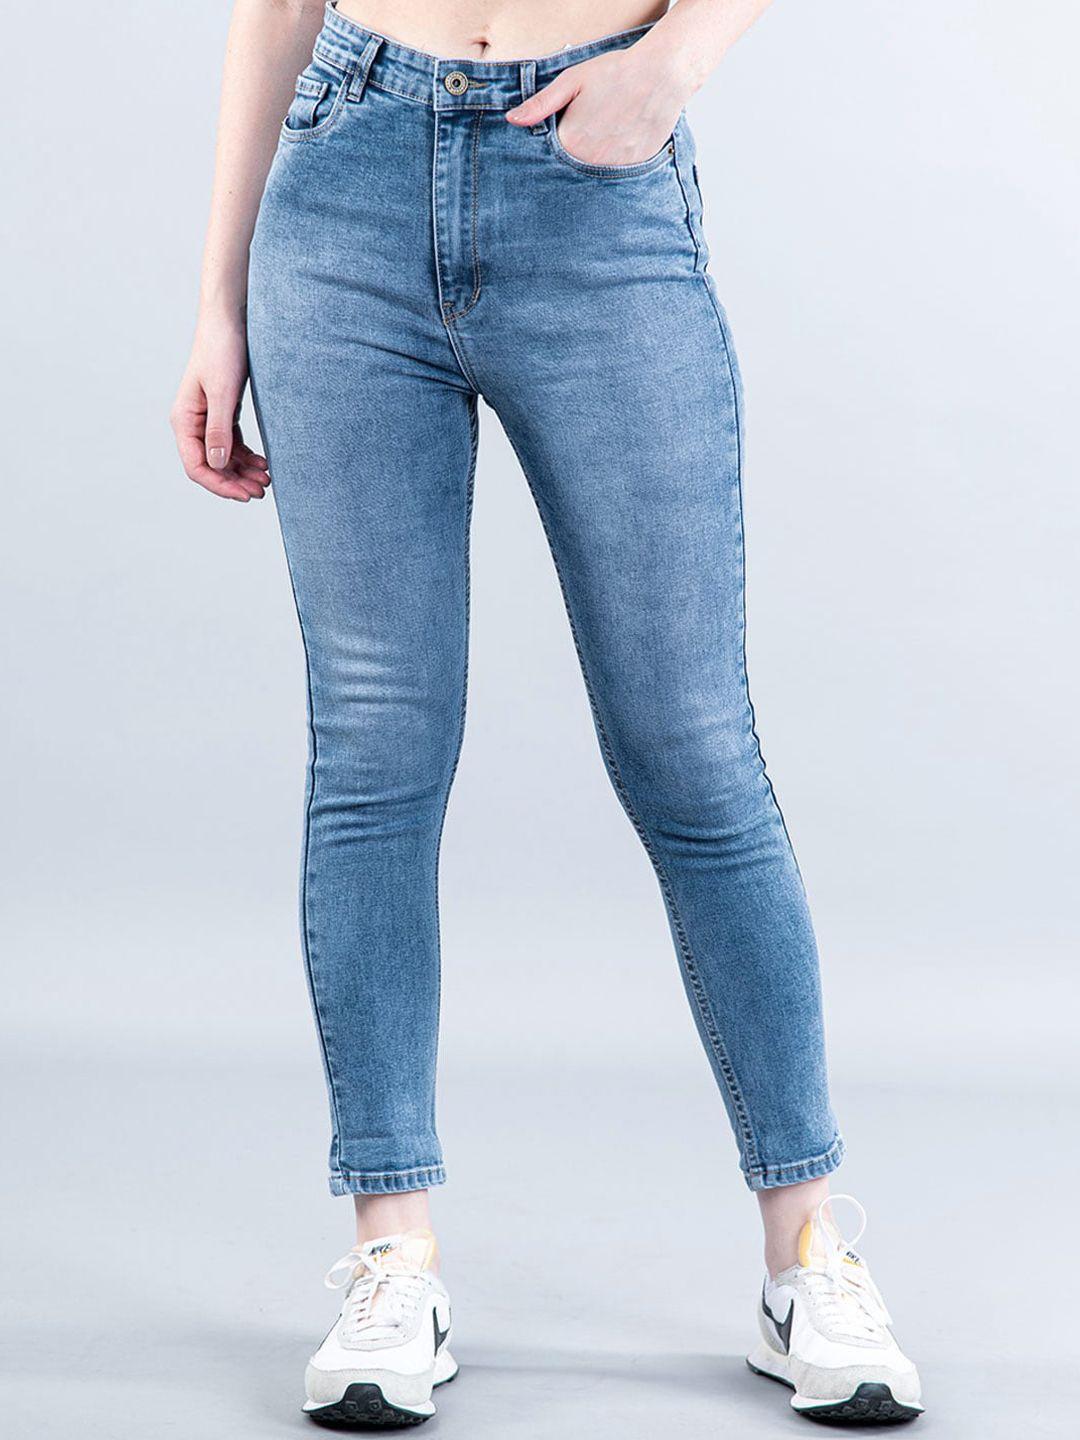 tistabene-women-comfort-skinny-fit-cotton-light-fade-jeans